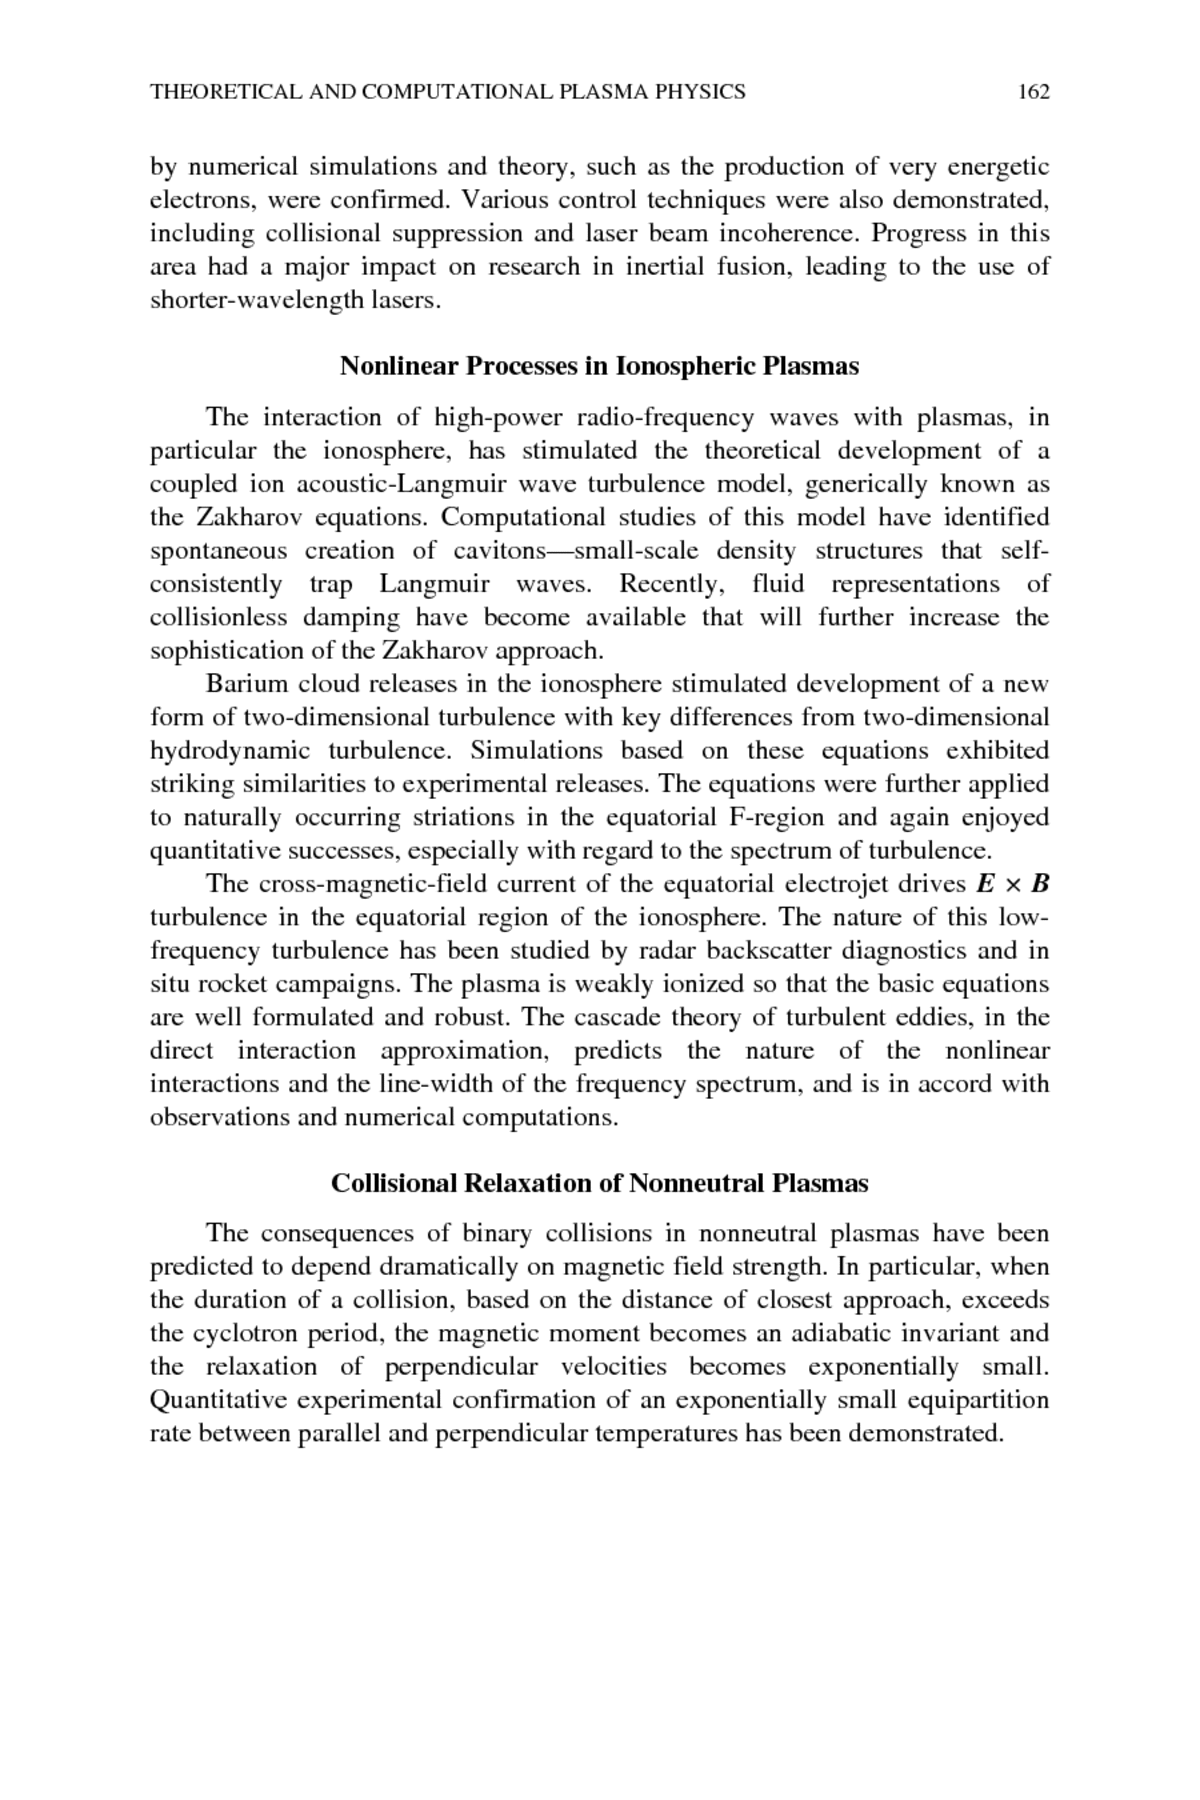 Plasma theory & computation, Research